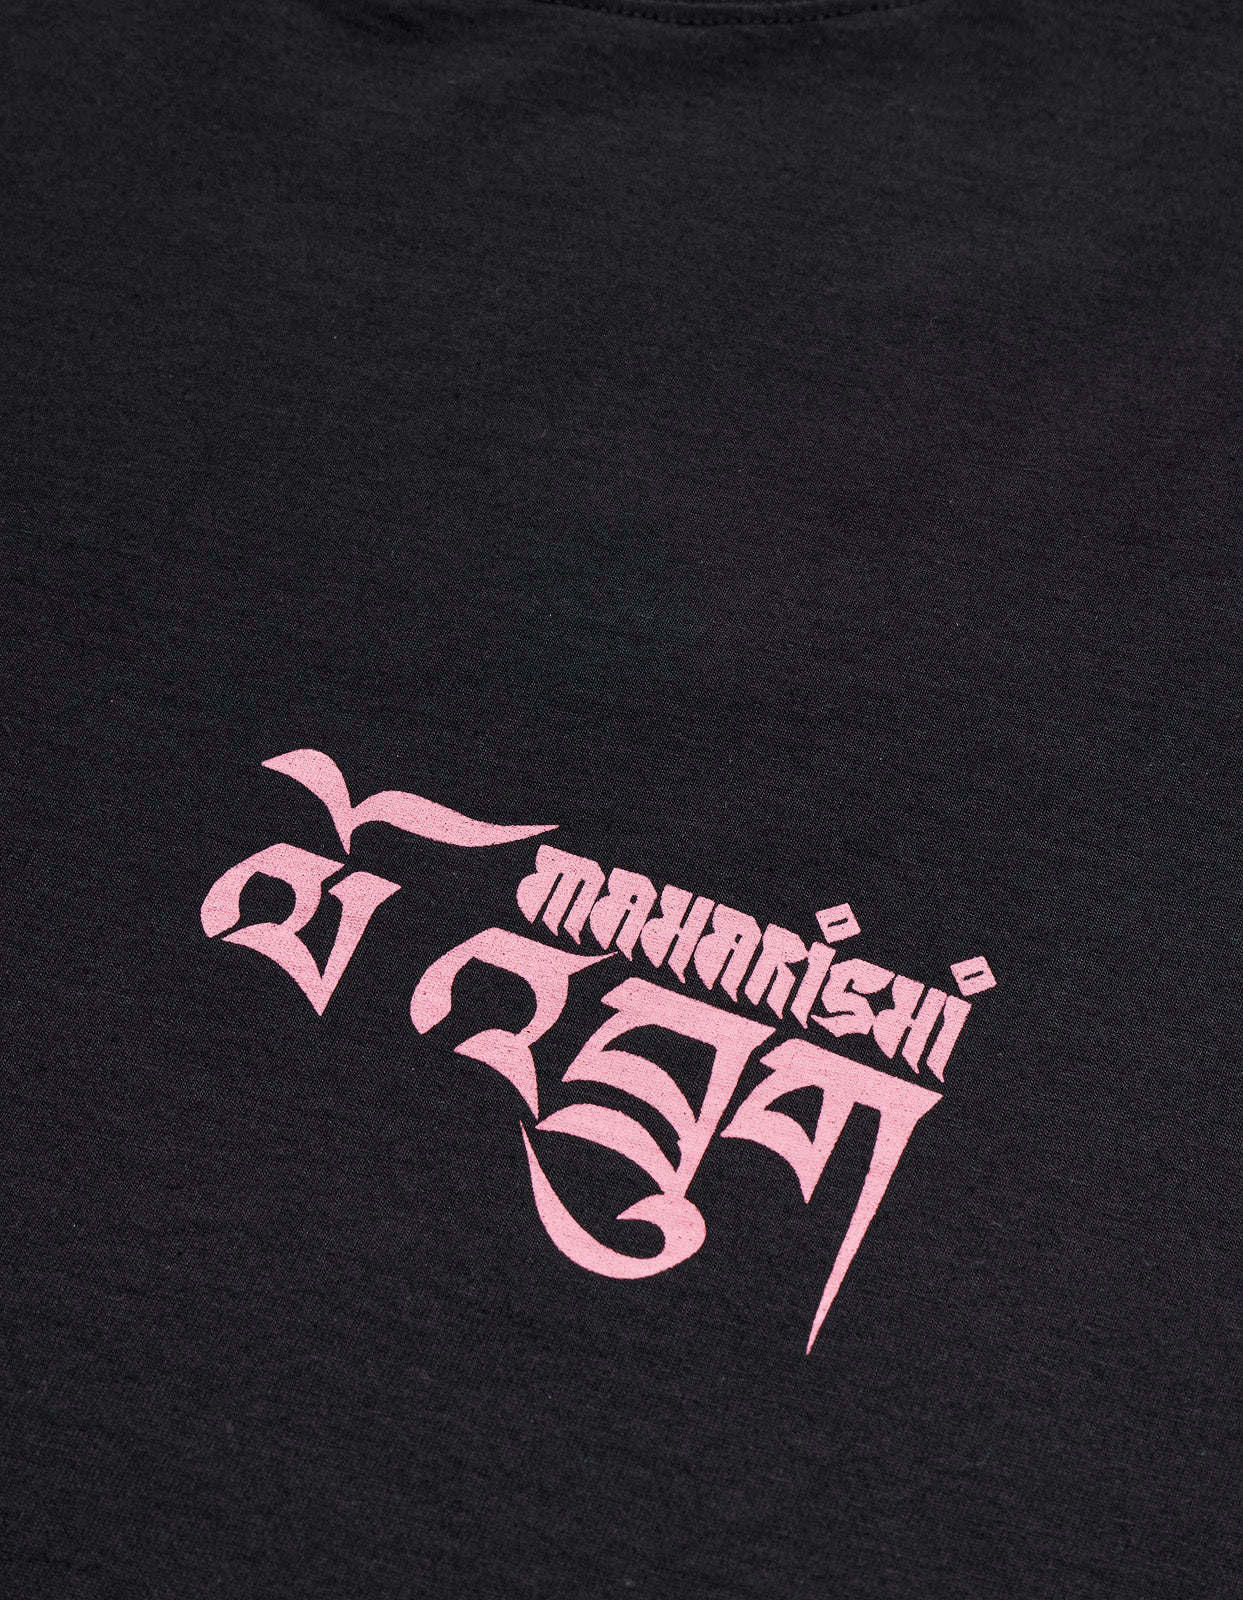 Dragon Breathable T-shirt Megabaits - carp black - M